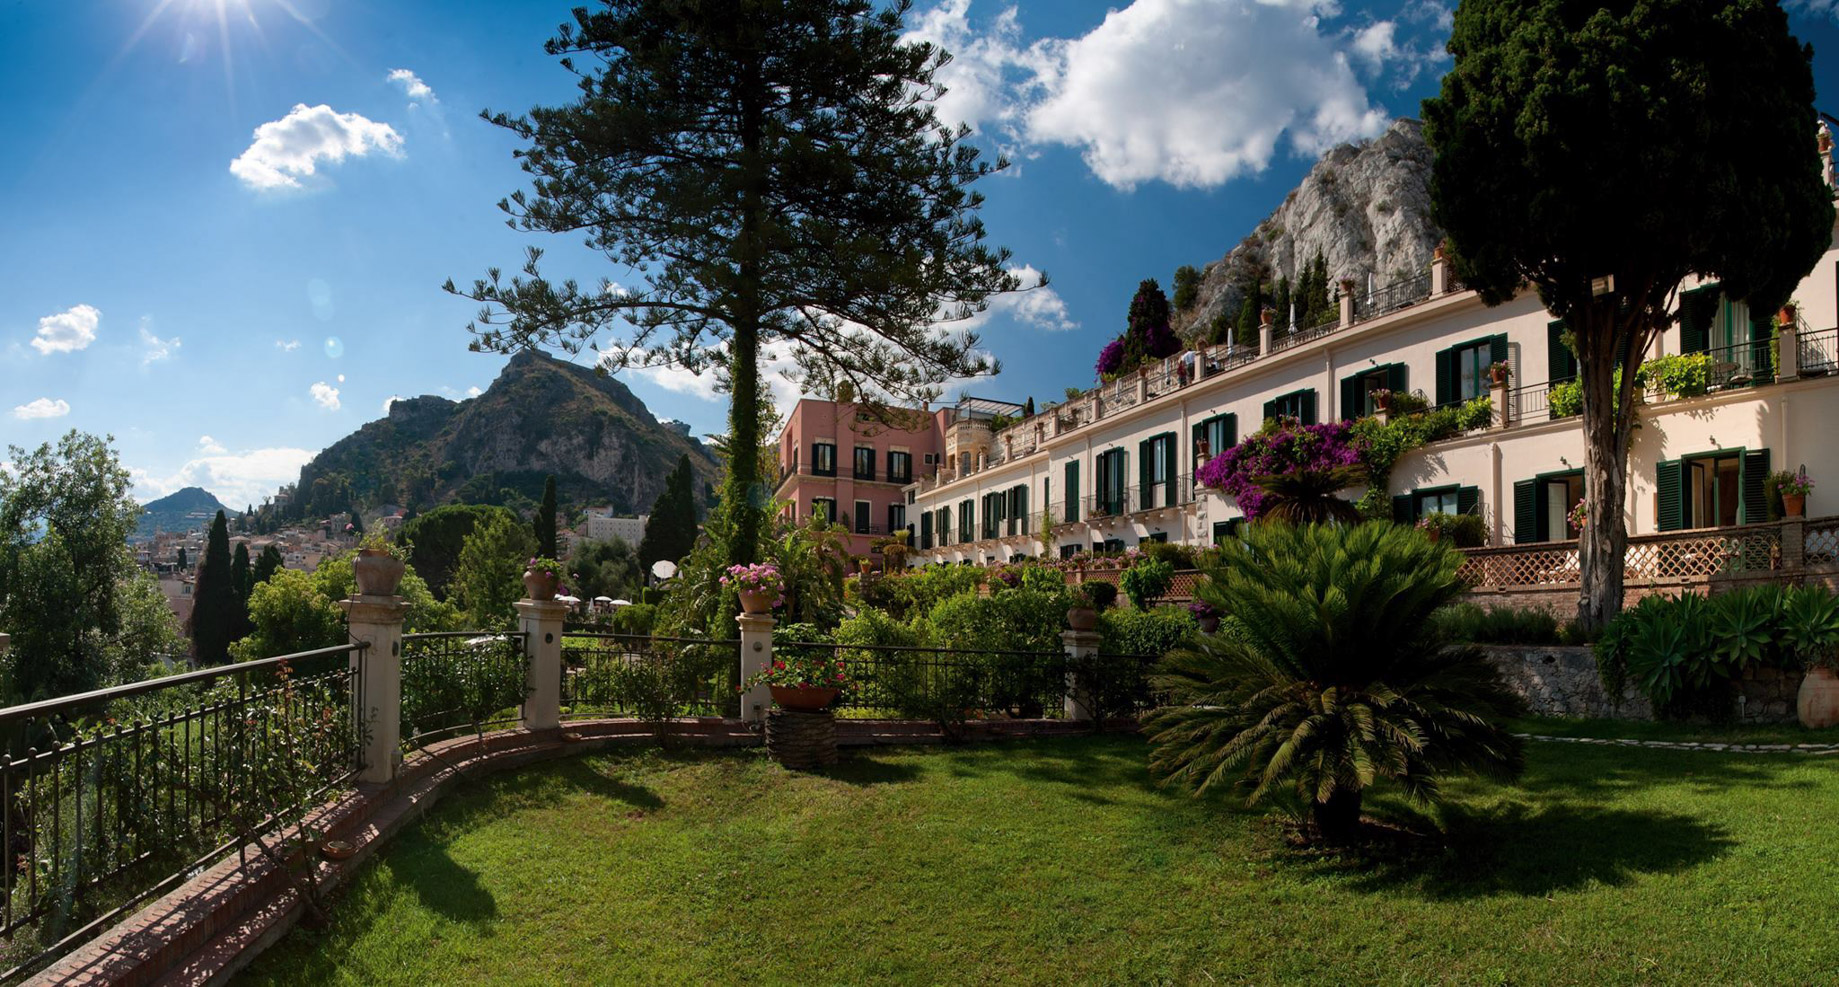 170 – Grand Hotel Timeo, A Belmond Hotel – Taormina, Italy